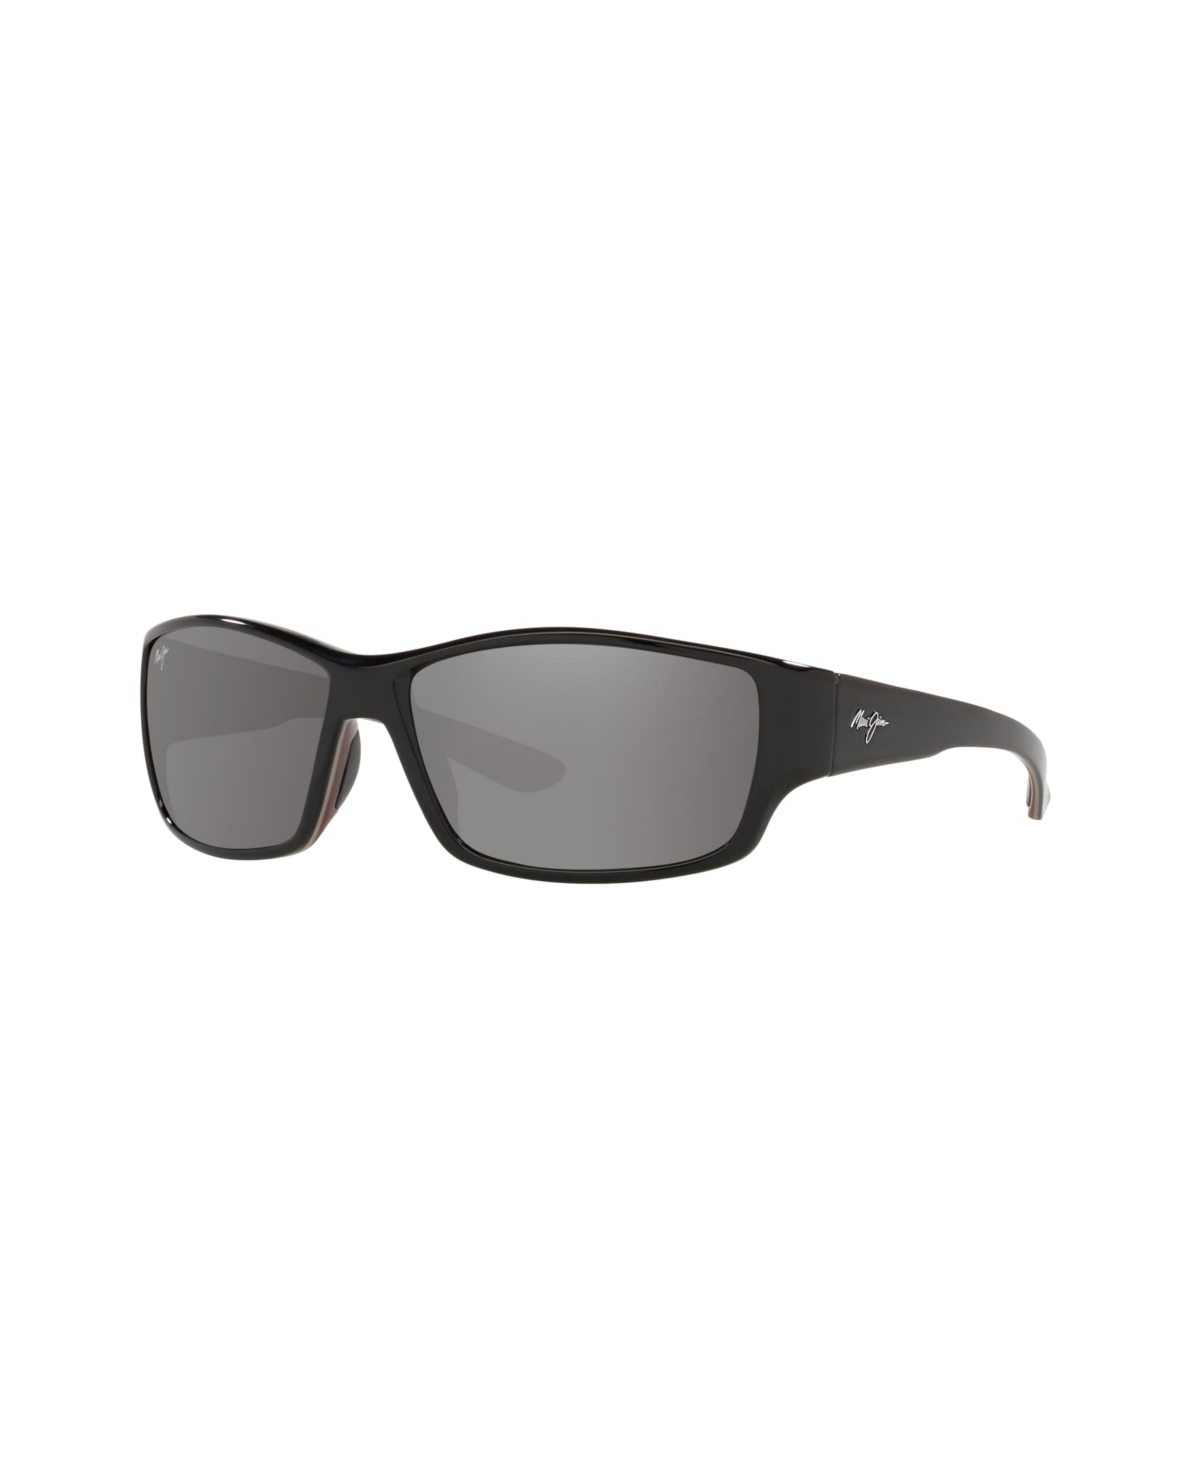 Men's Sunglasses, Local Kine Mj000618 - Black